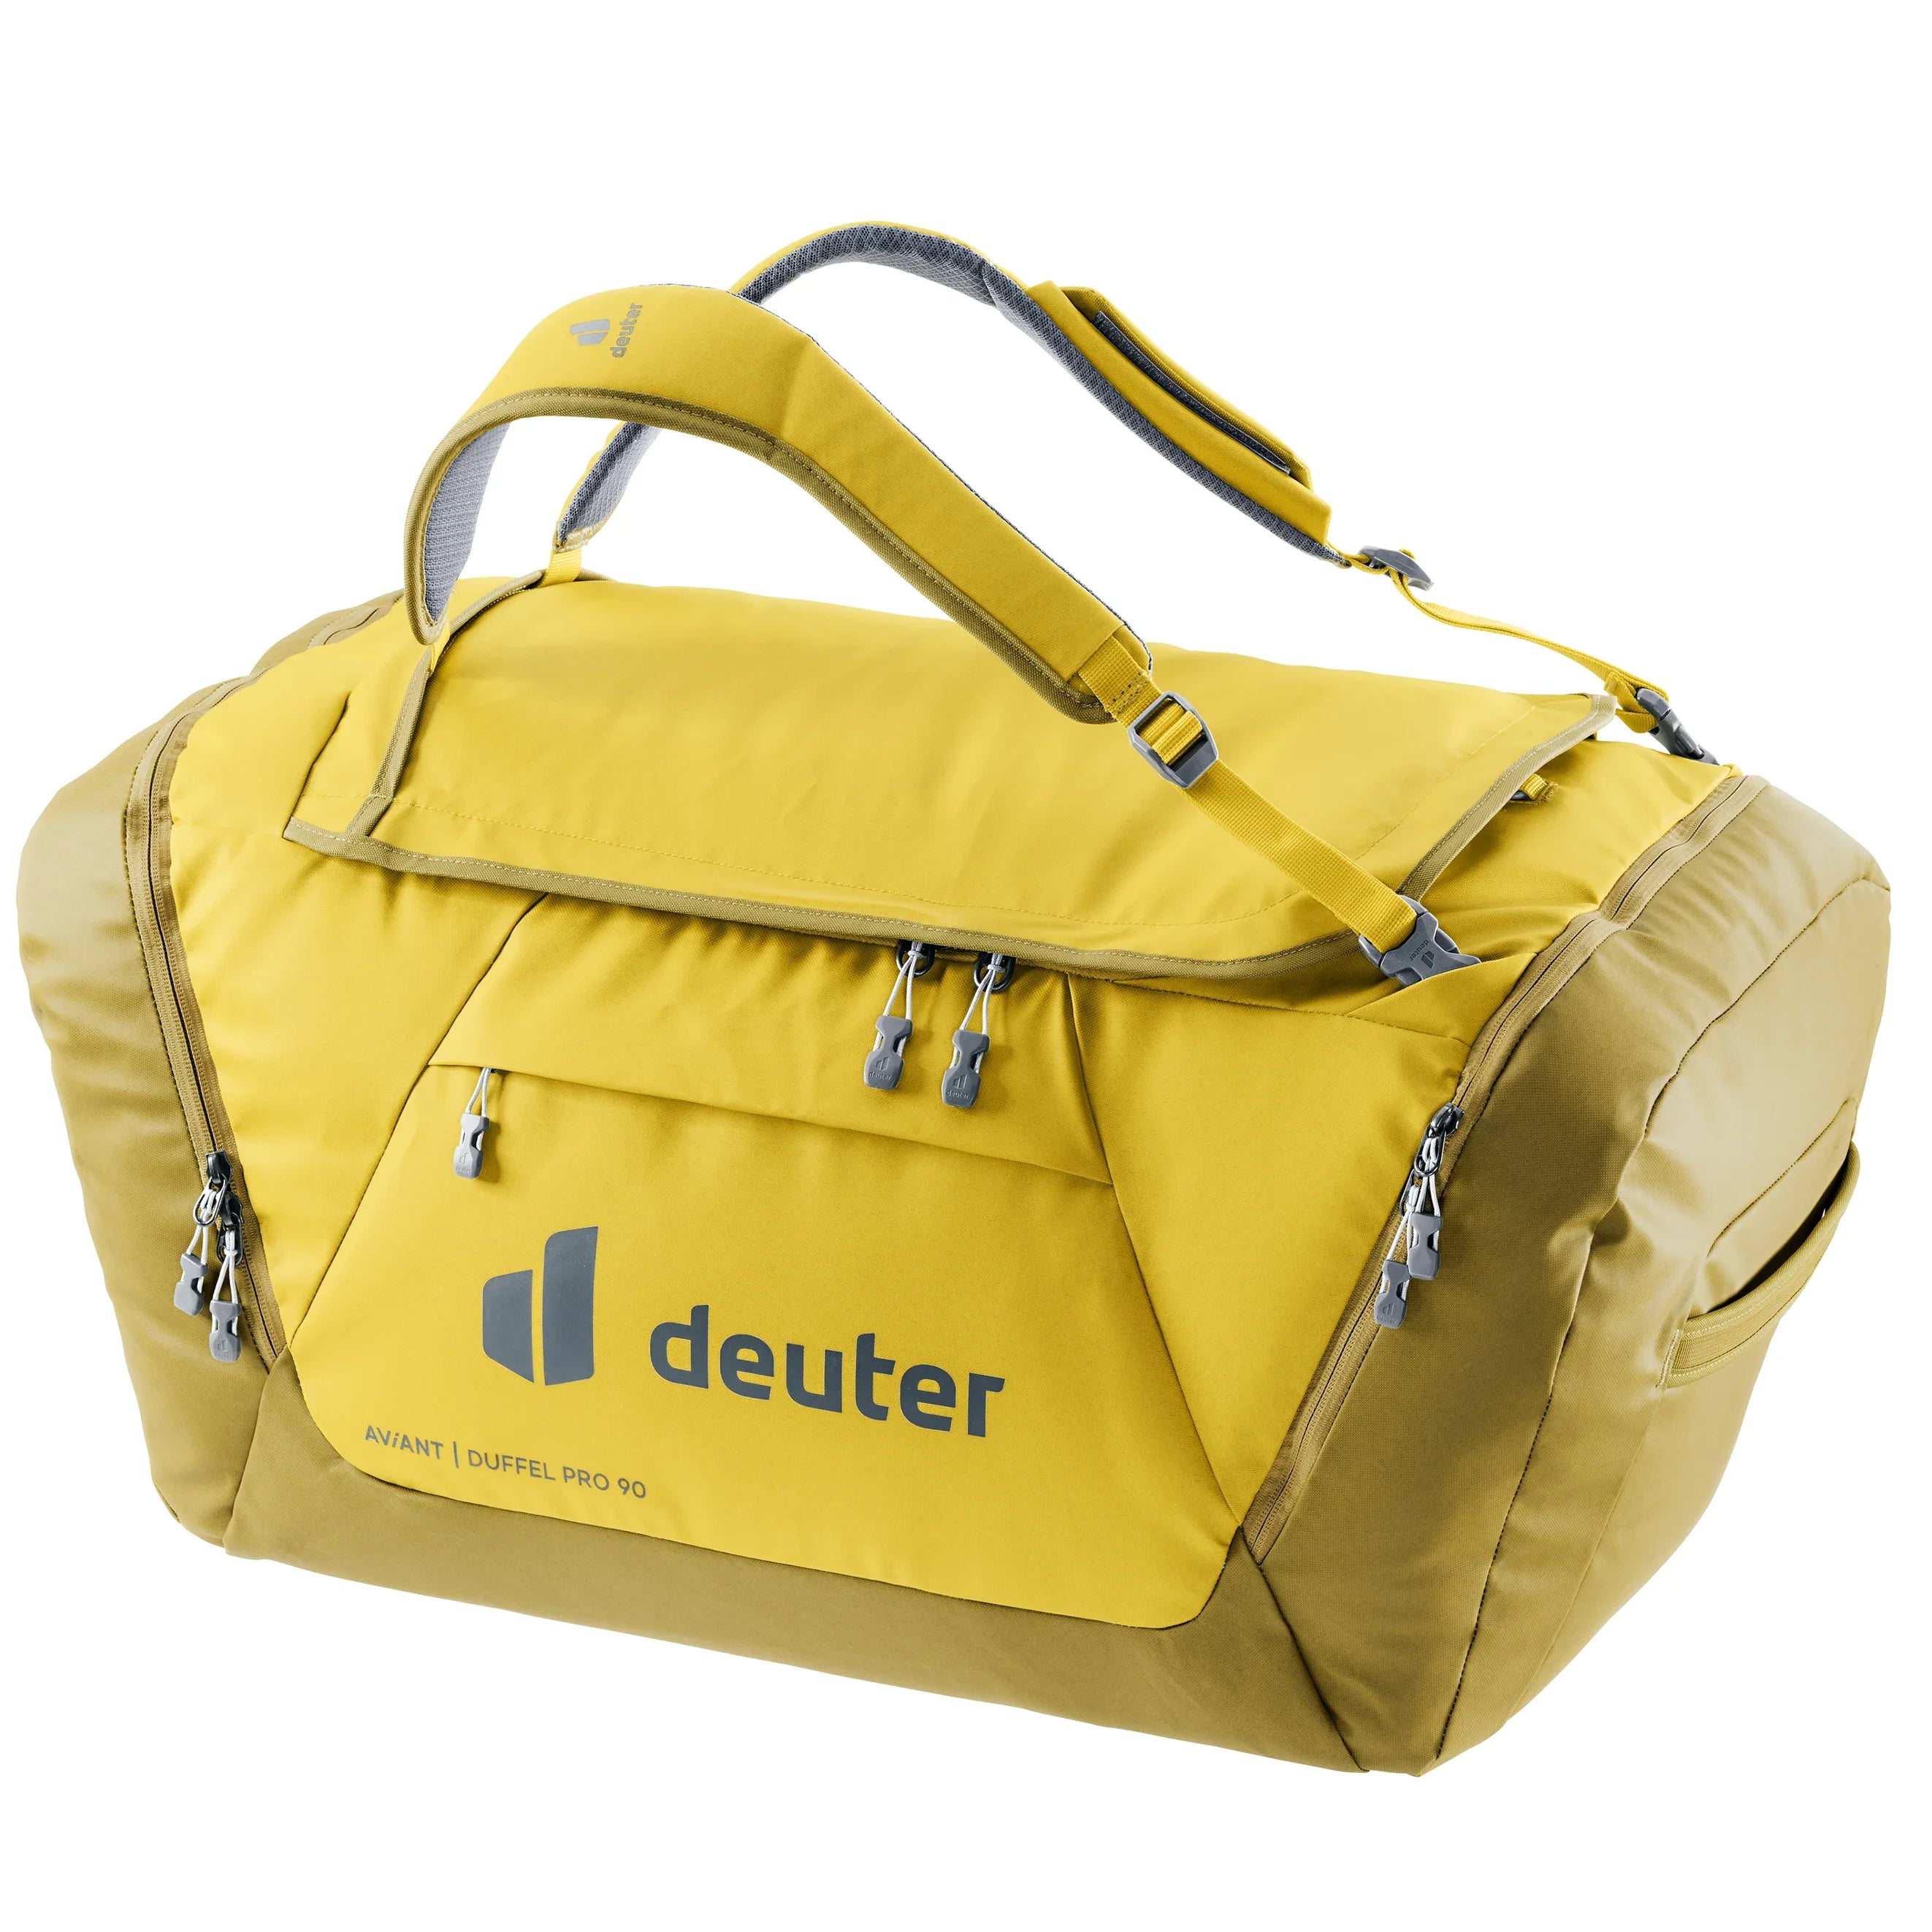 Deuter Travel Aviant Duffel Pro 90 sac de voyage 80 cm - maïs-curcuma